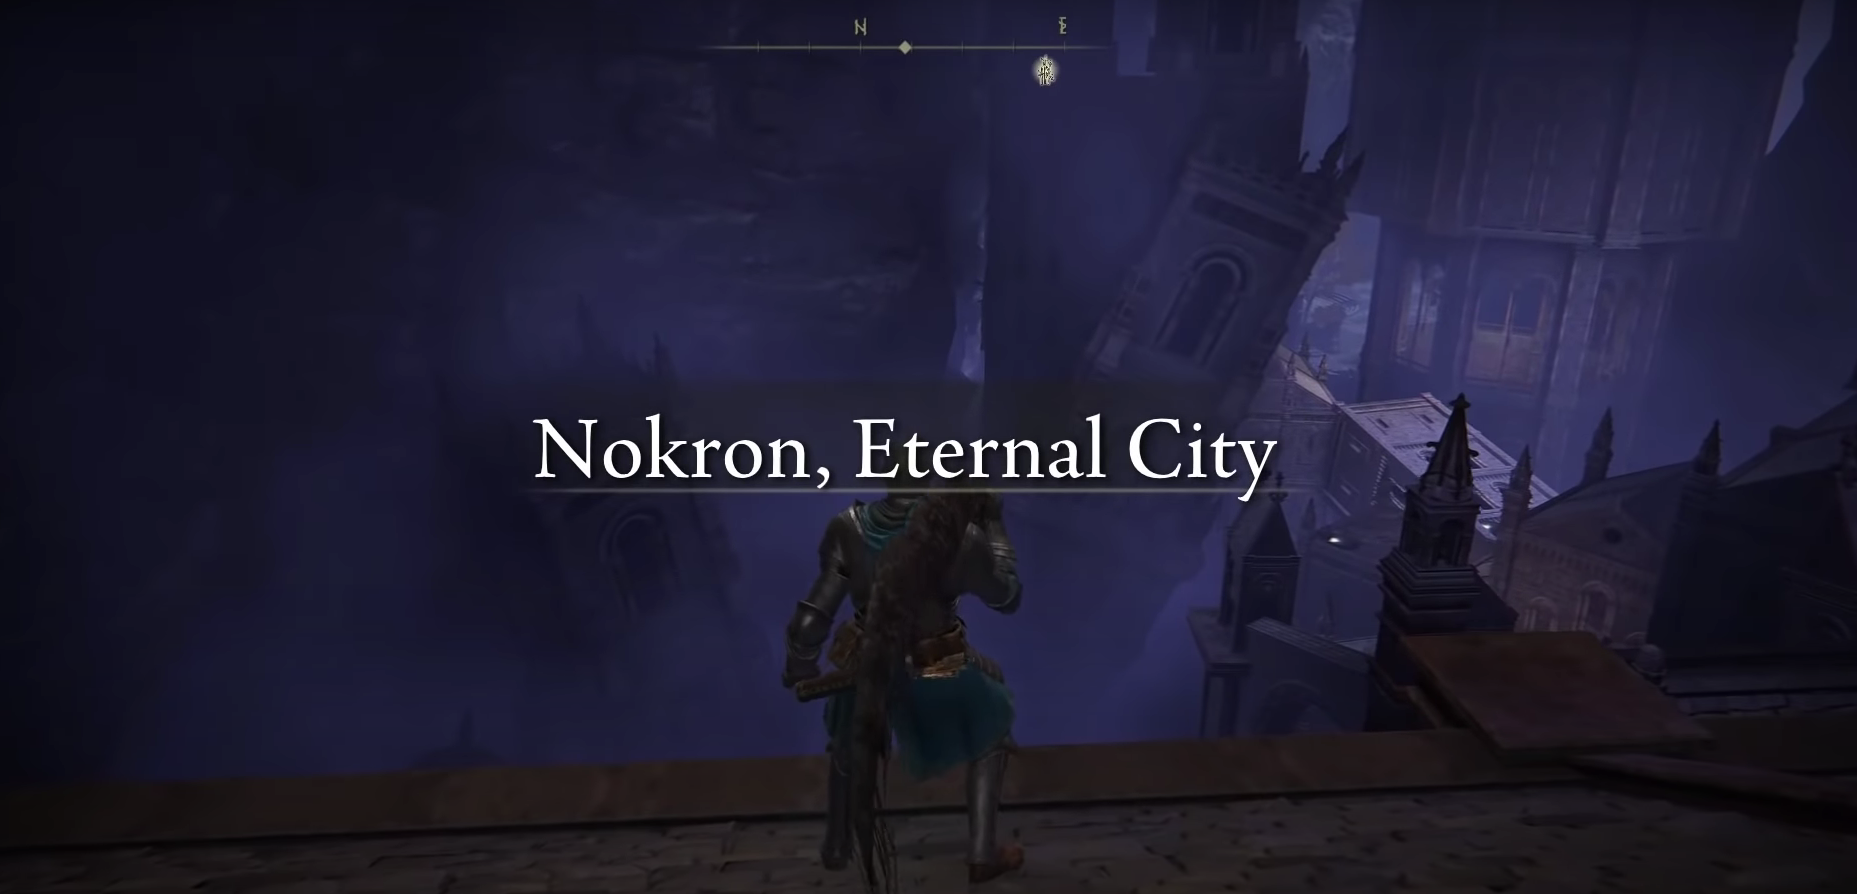 Nokron, Eternal City Arrived